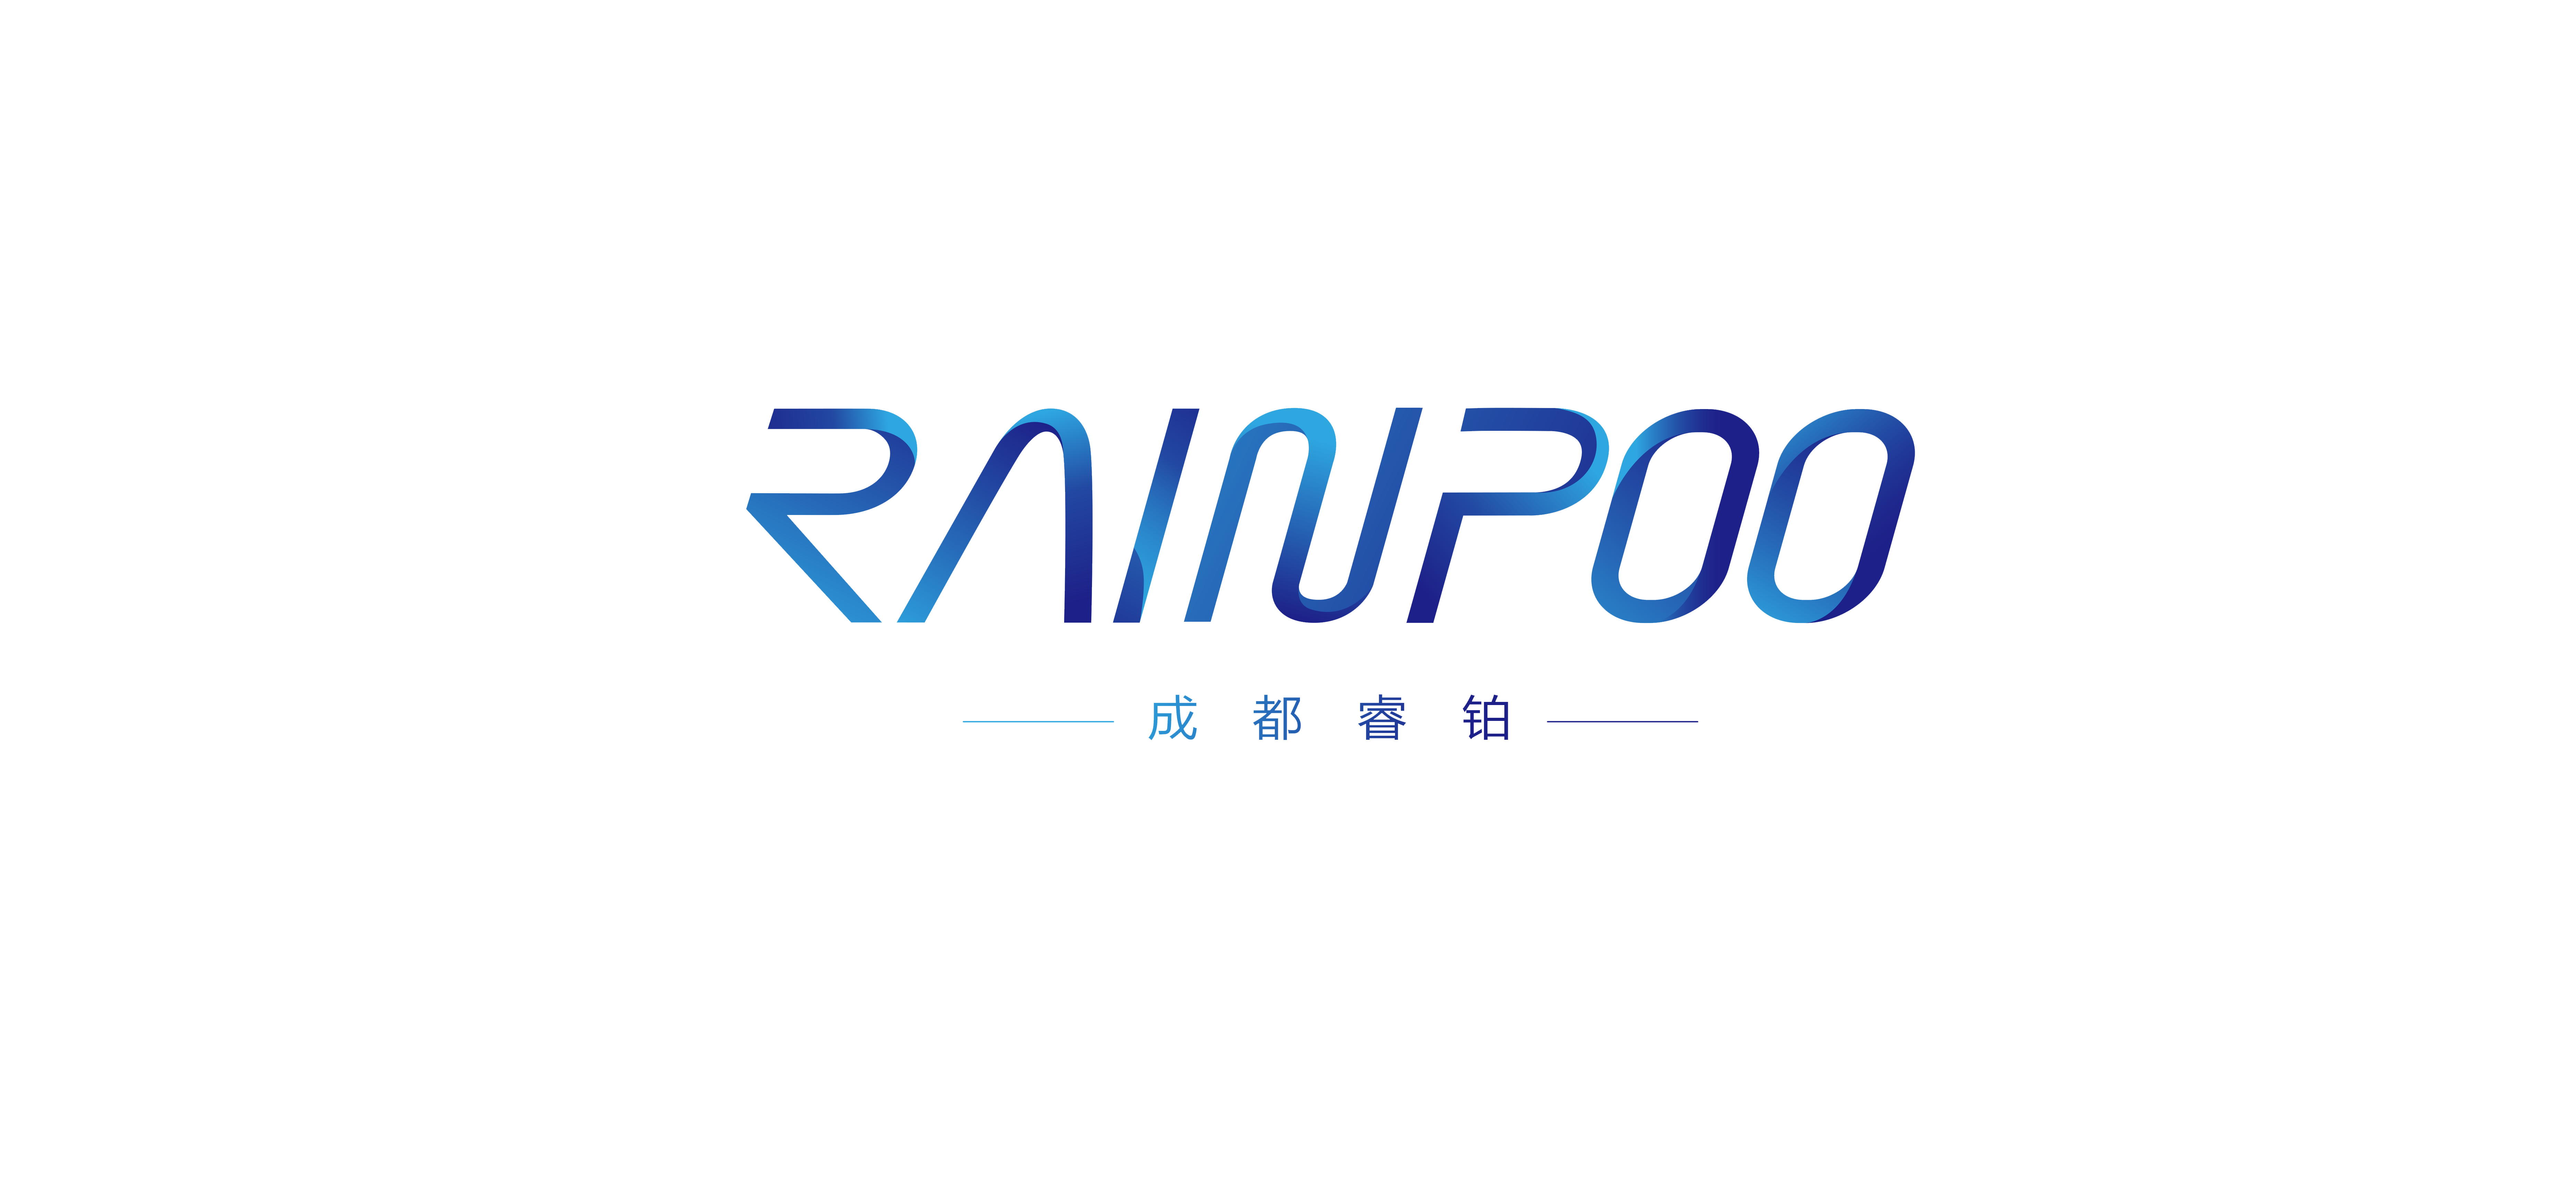 Rainpoo Logo